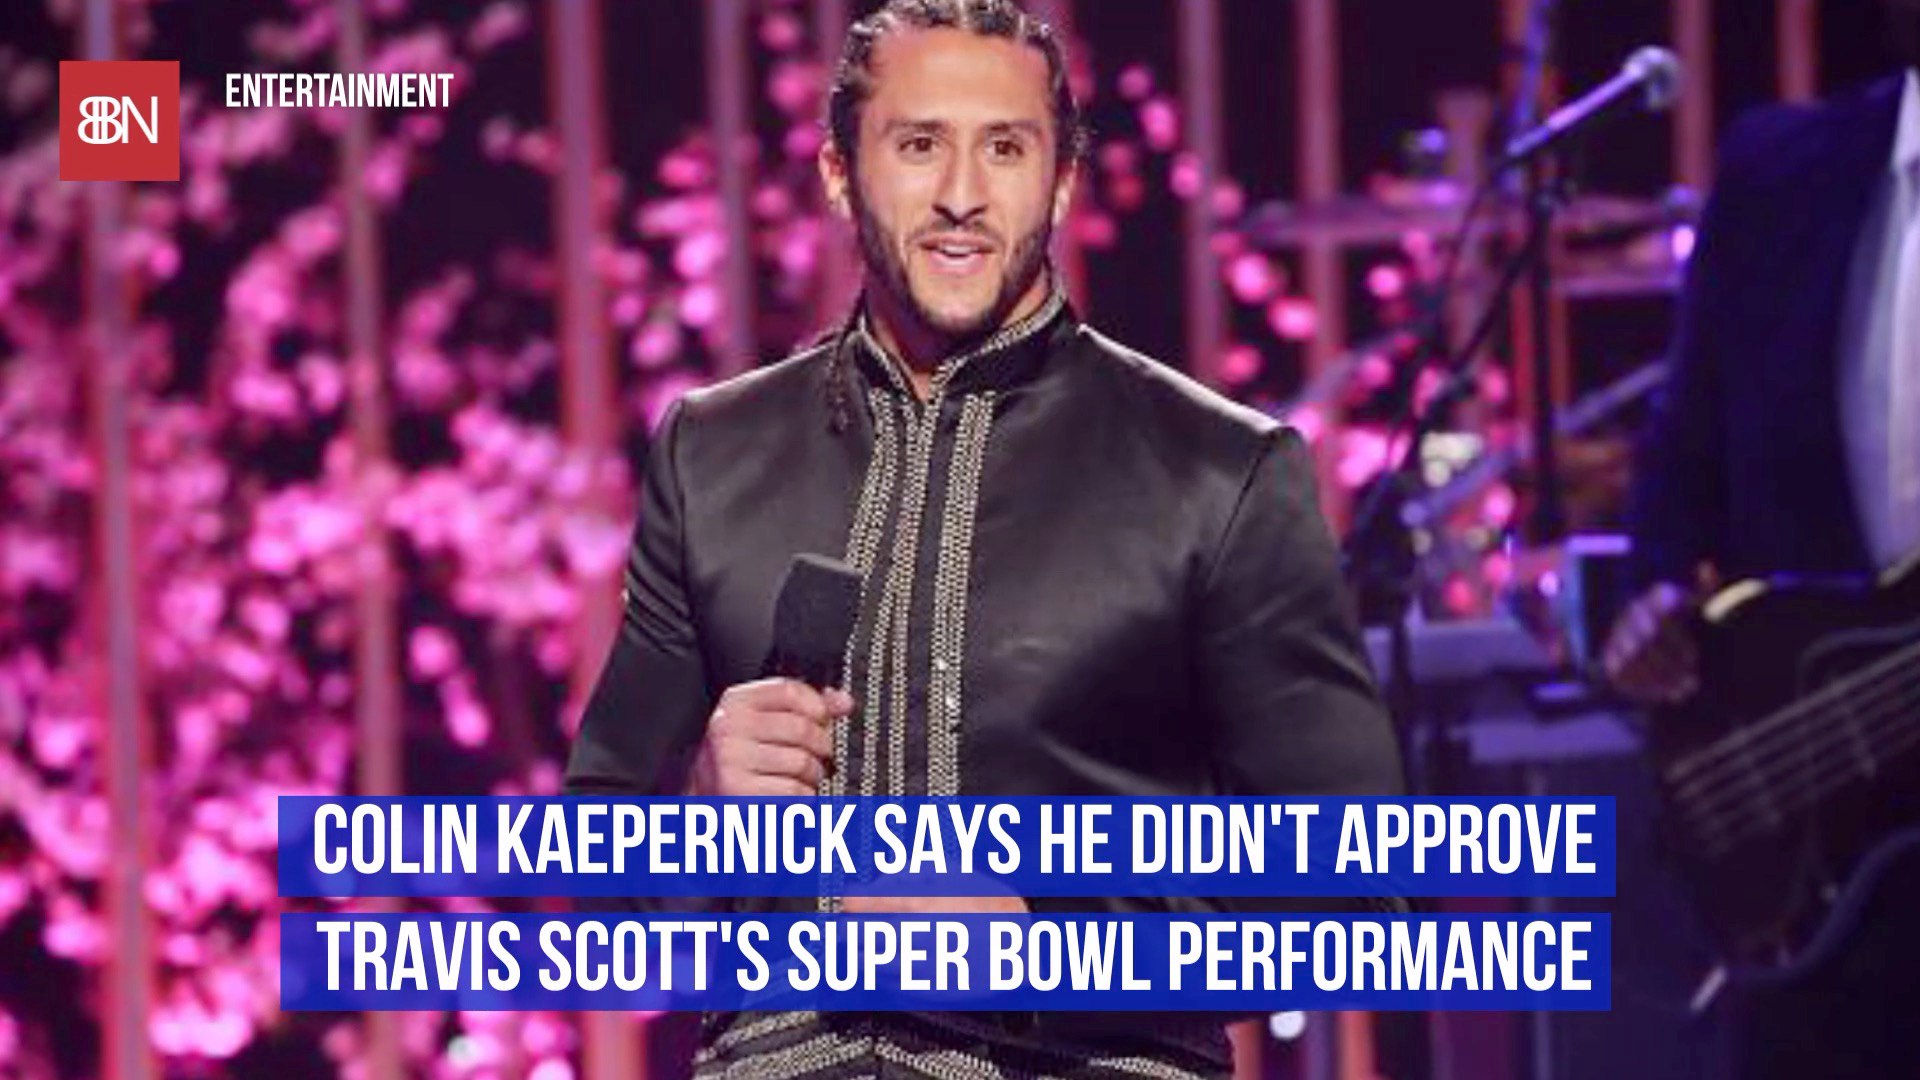 Colin Kaepernick Didn't Approve Of Travis Scott Super Bowl Appearance